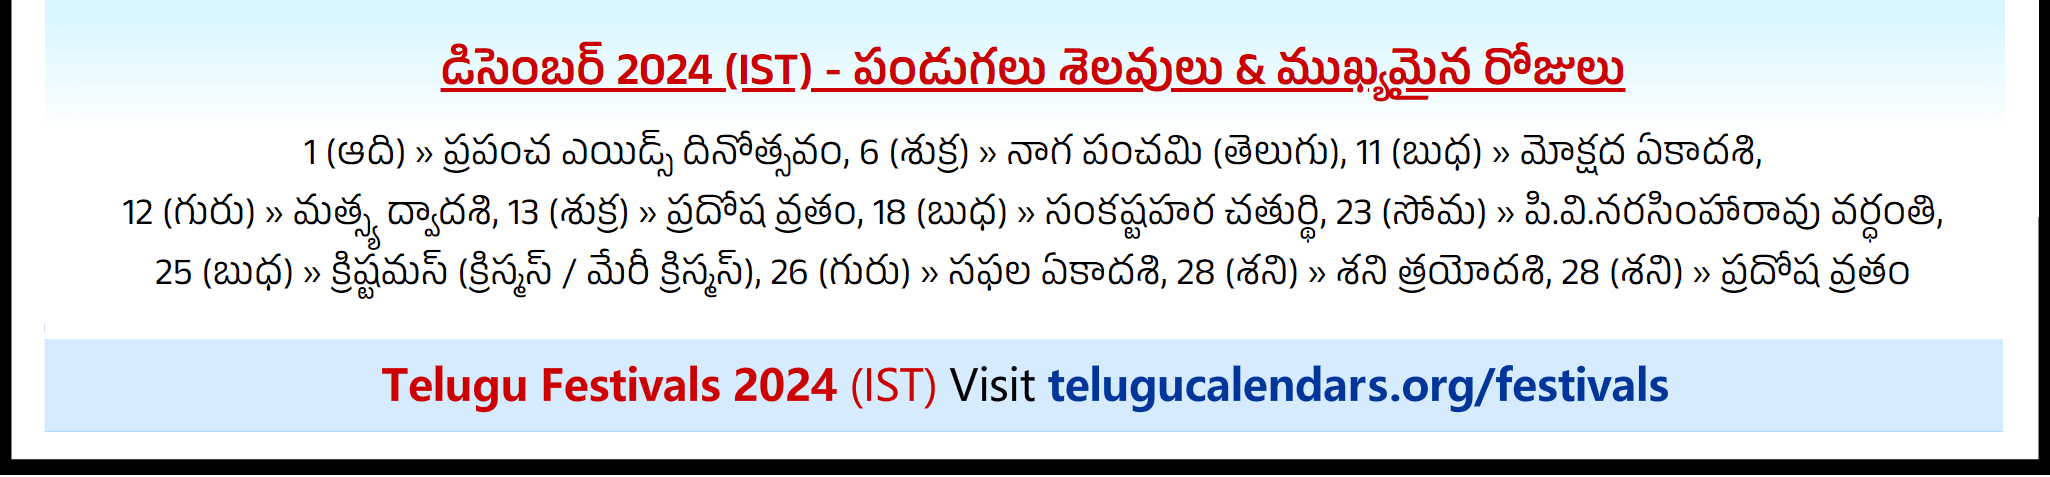 Telugu Festivals 2024 December Perth